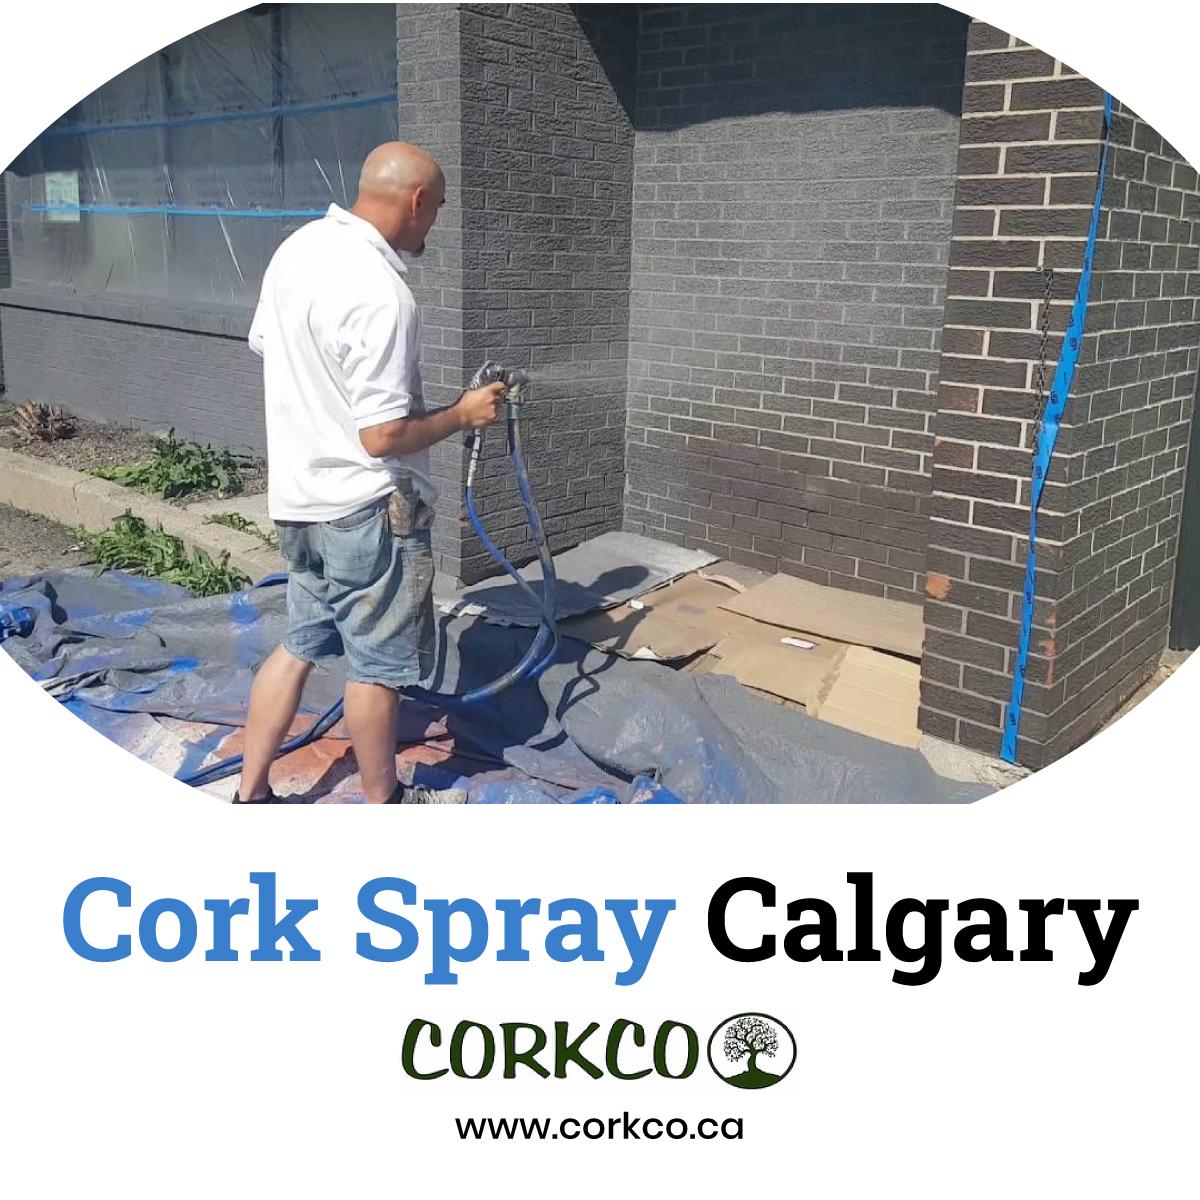 Cork Spray Calgary